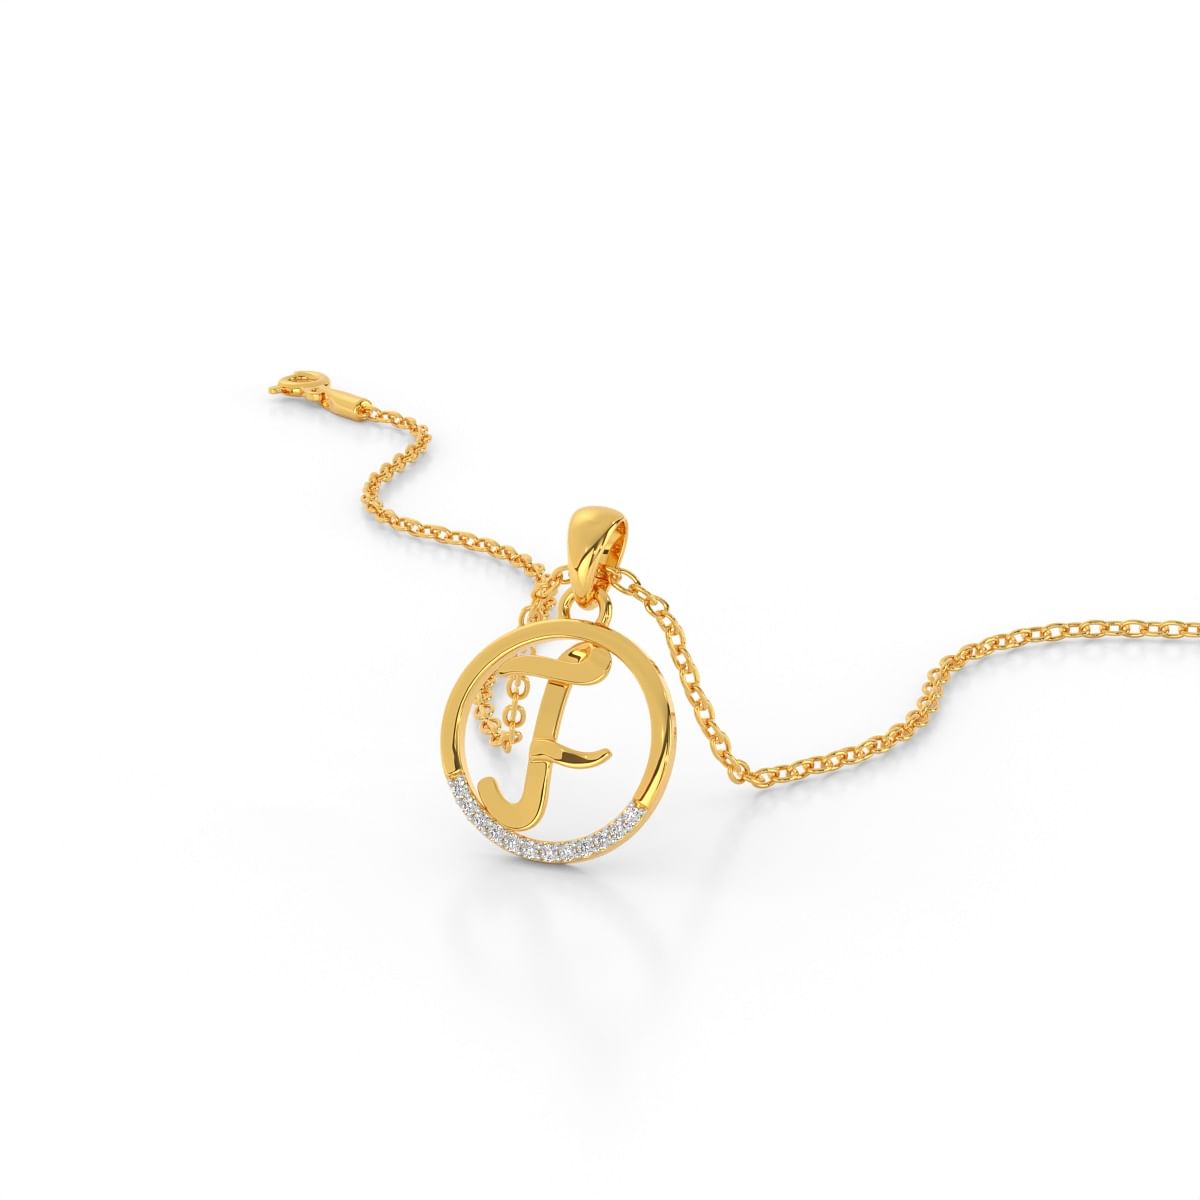 F letter diamond pendant in yellow gold